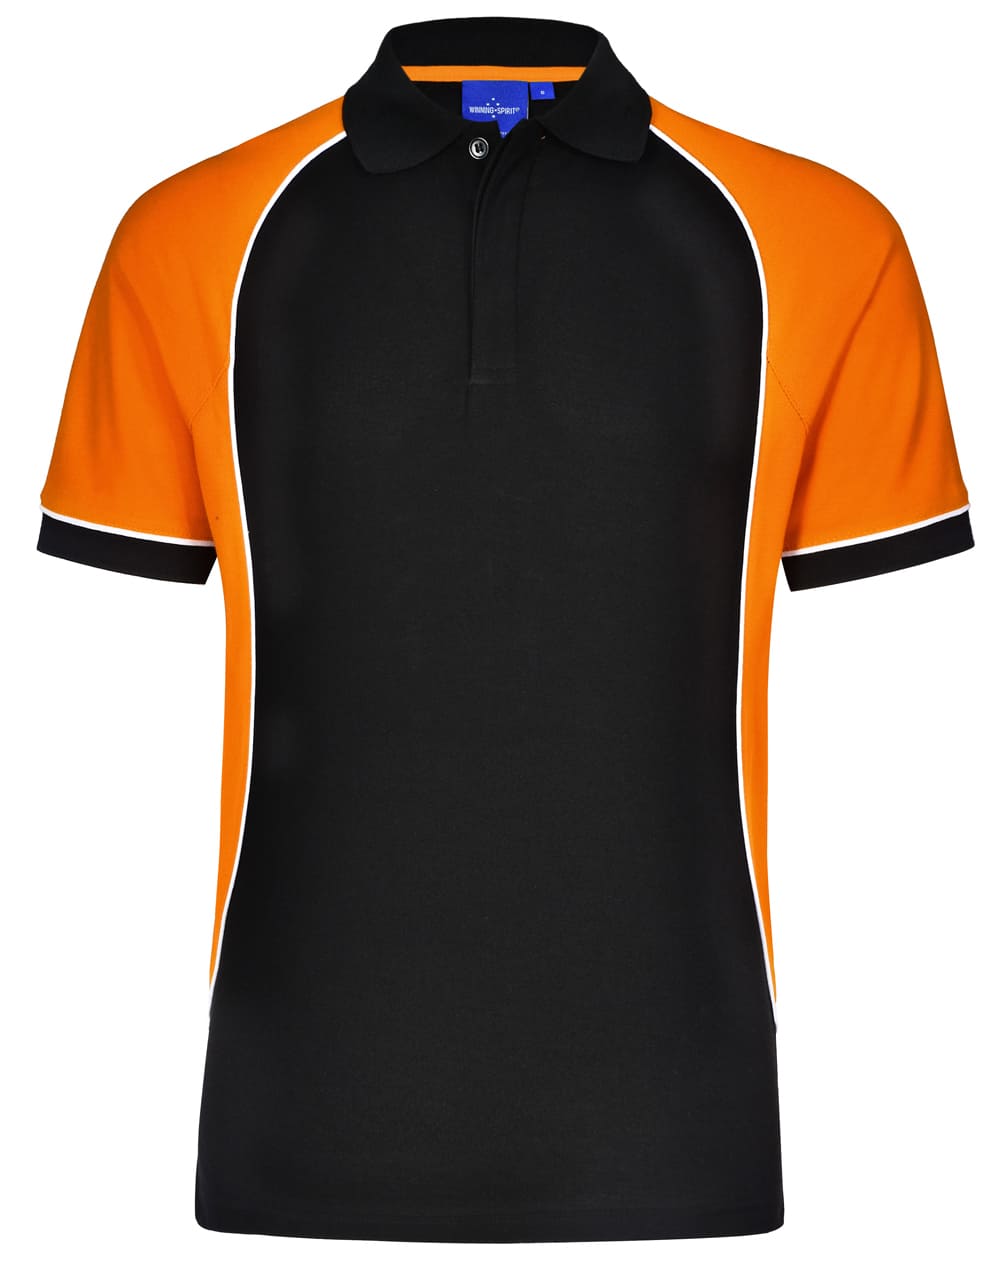 Custom Printed Mens Arena (Black, White, Orange) Tri-Color Polo T-Shirts Online Australia